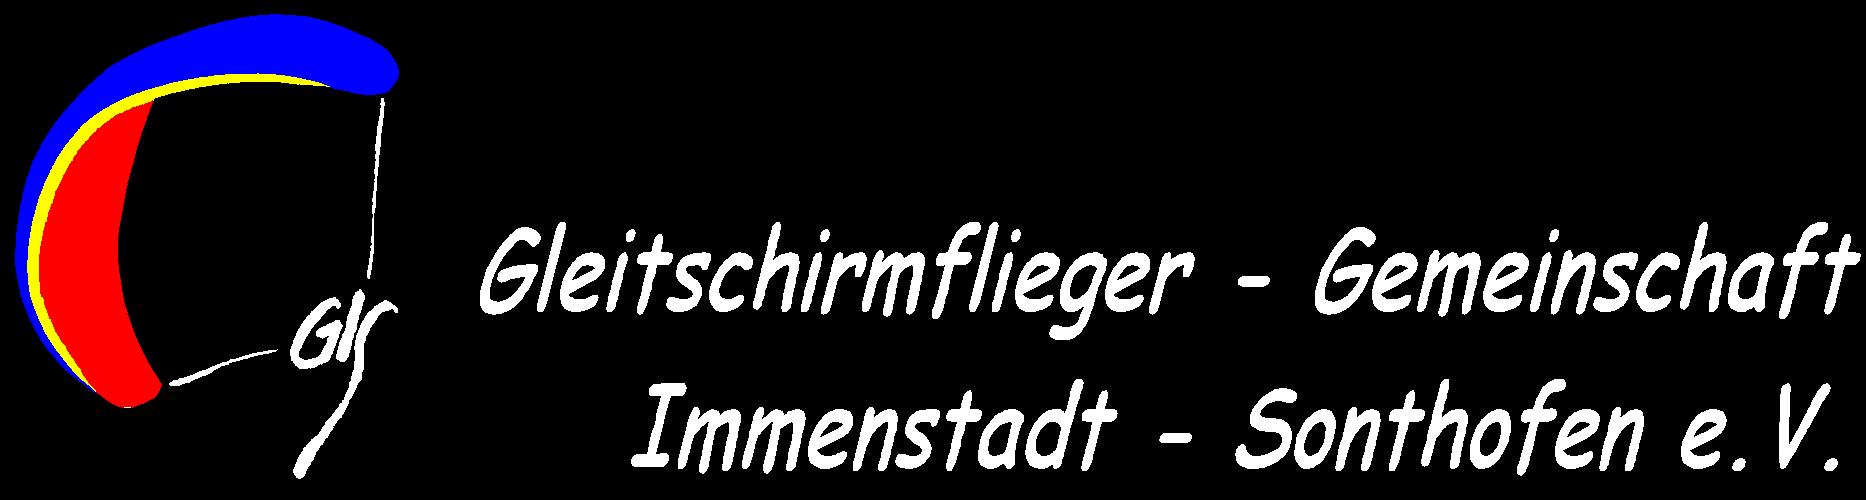 Gleitschirmflieger - Gemeinschaft Immenstadt-Sonthofen e.V.